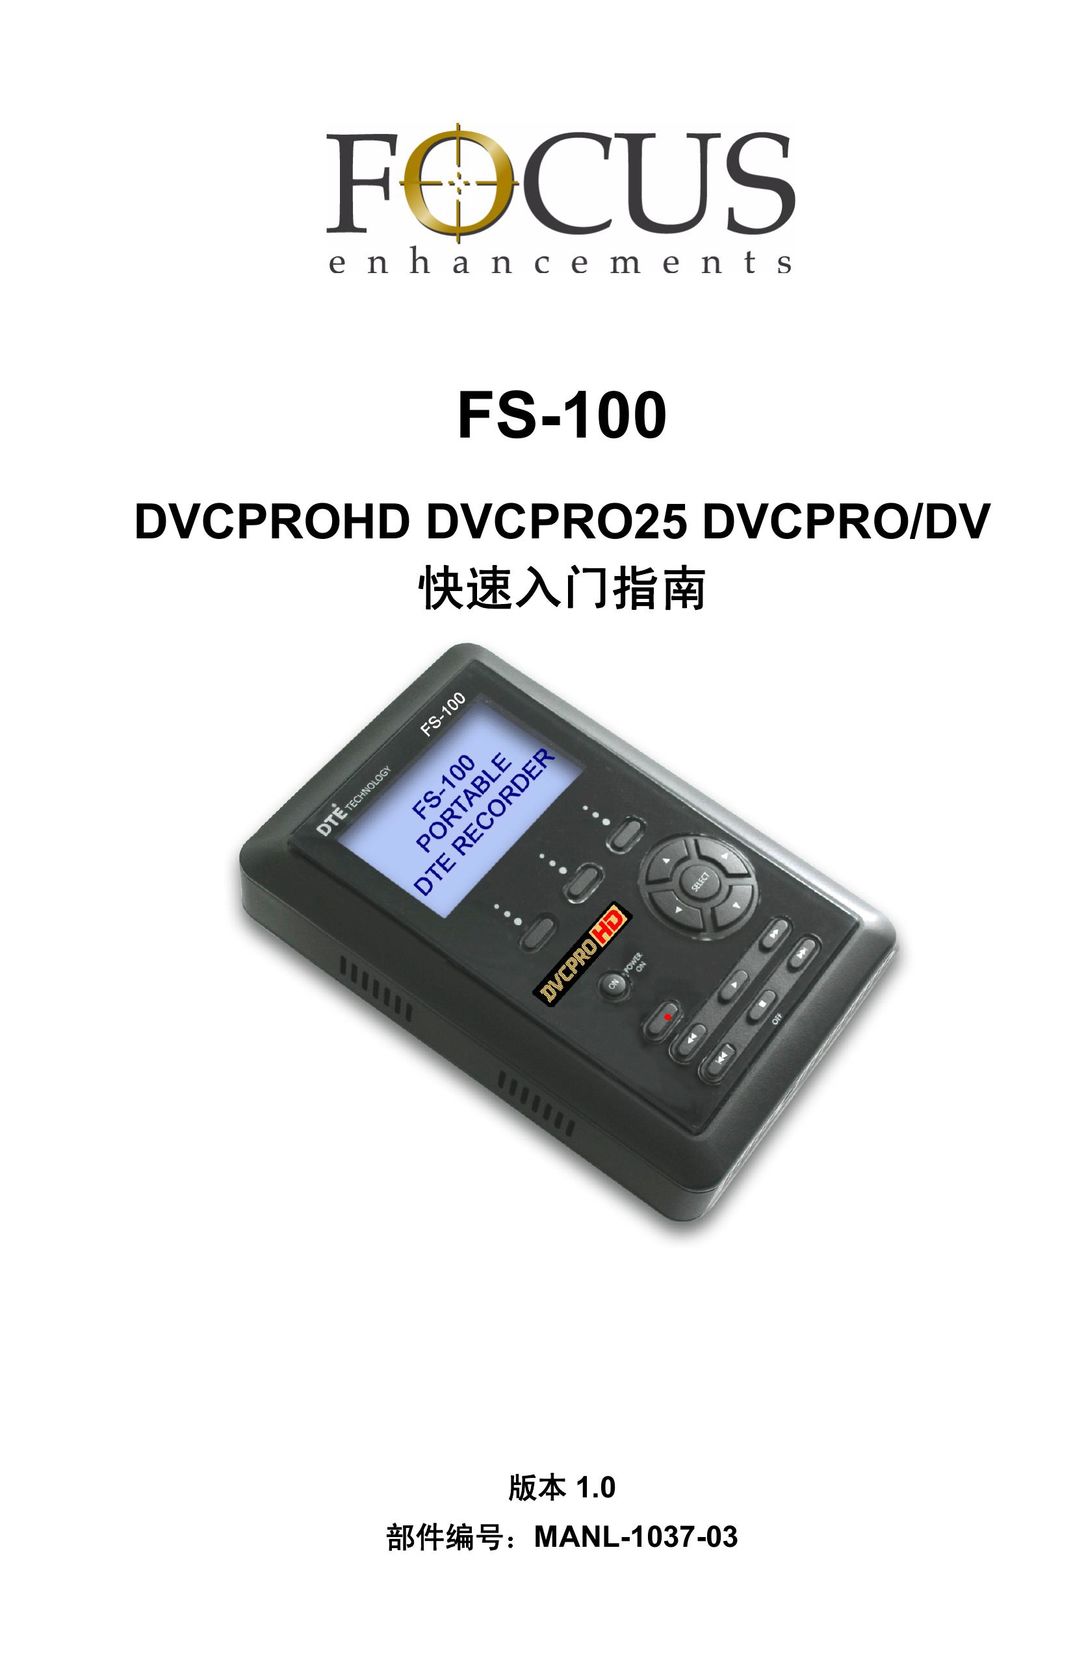 FOCUS Enhancements DVCPRO25 Microcassette Recorder User Manual